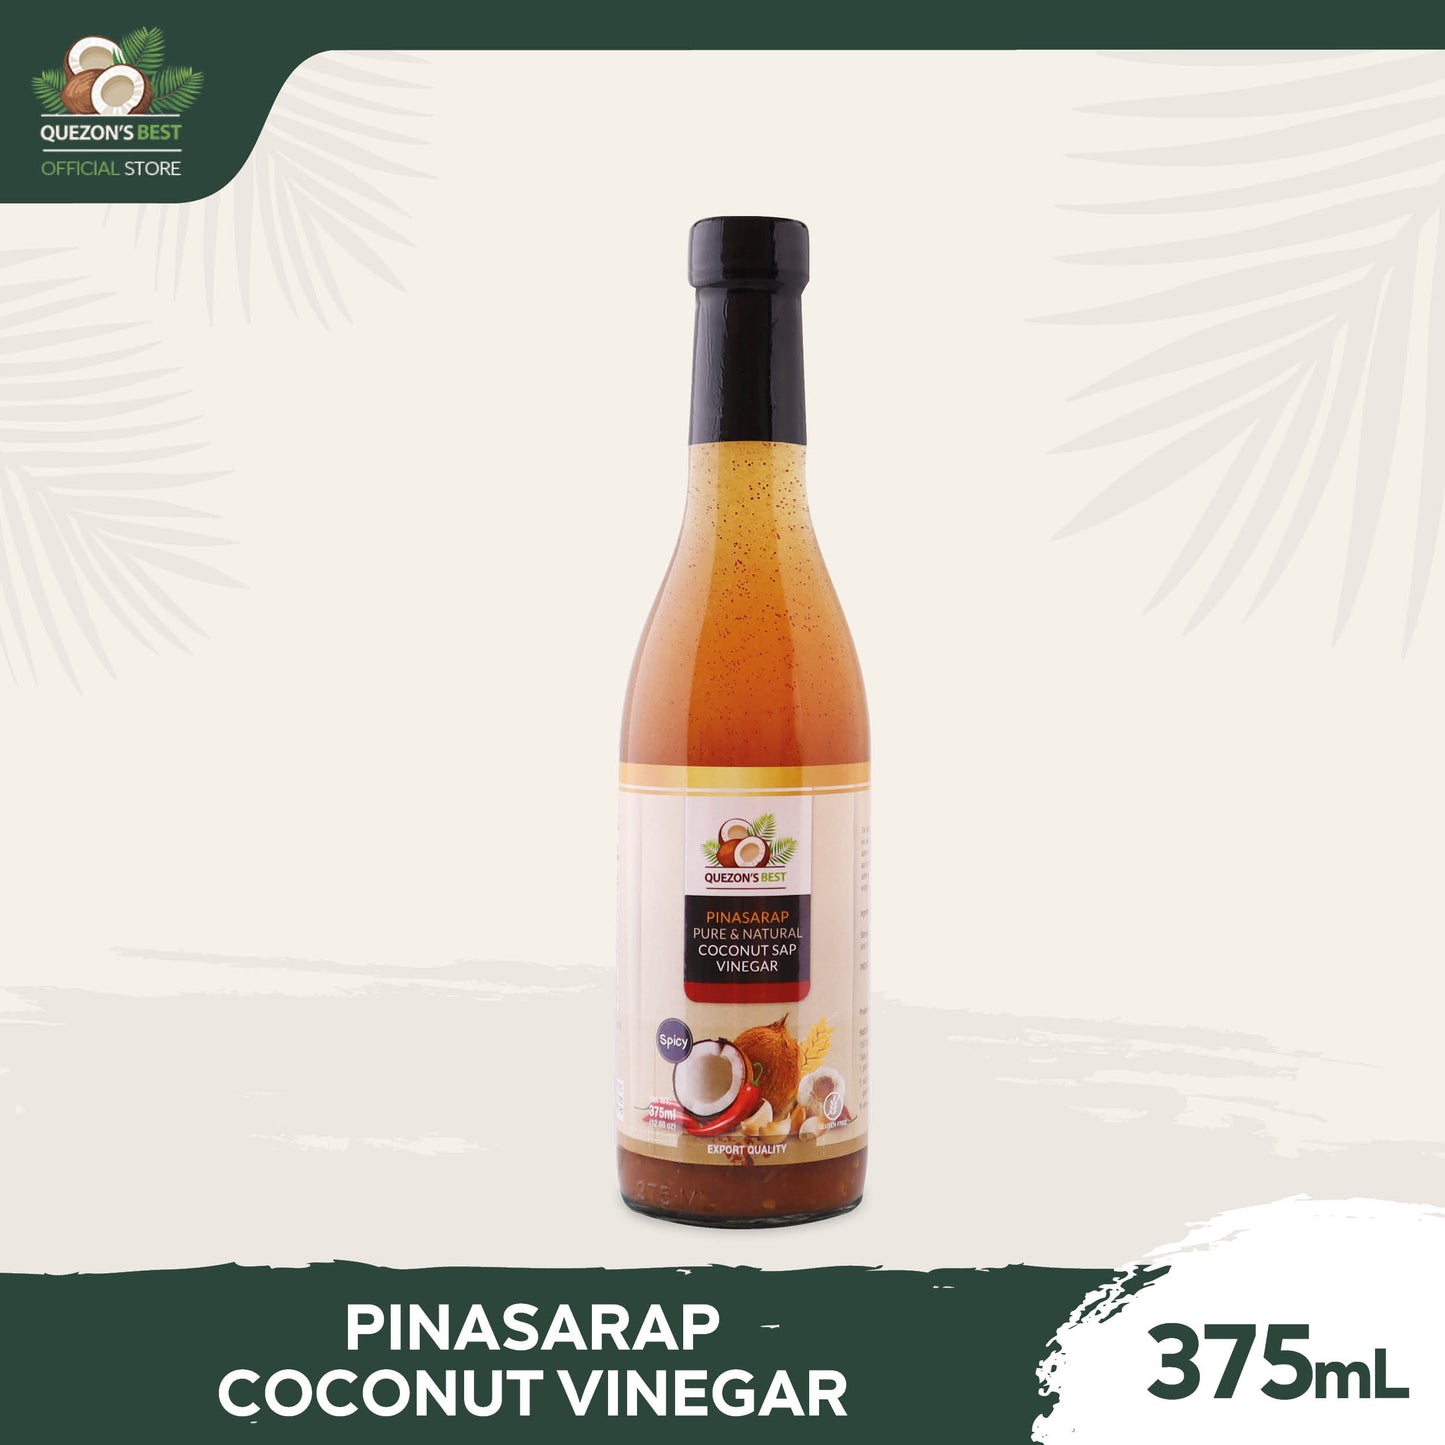 Quezon's Best Pinasarap (Spicy) Coconut Sap Vinegar 375mL